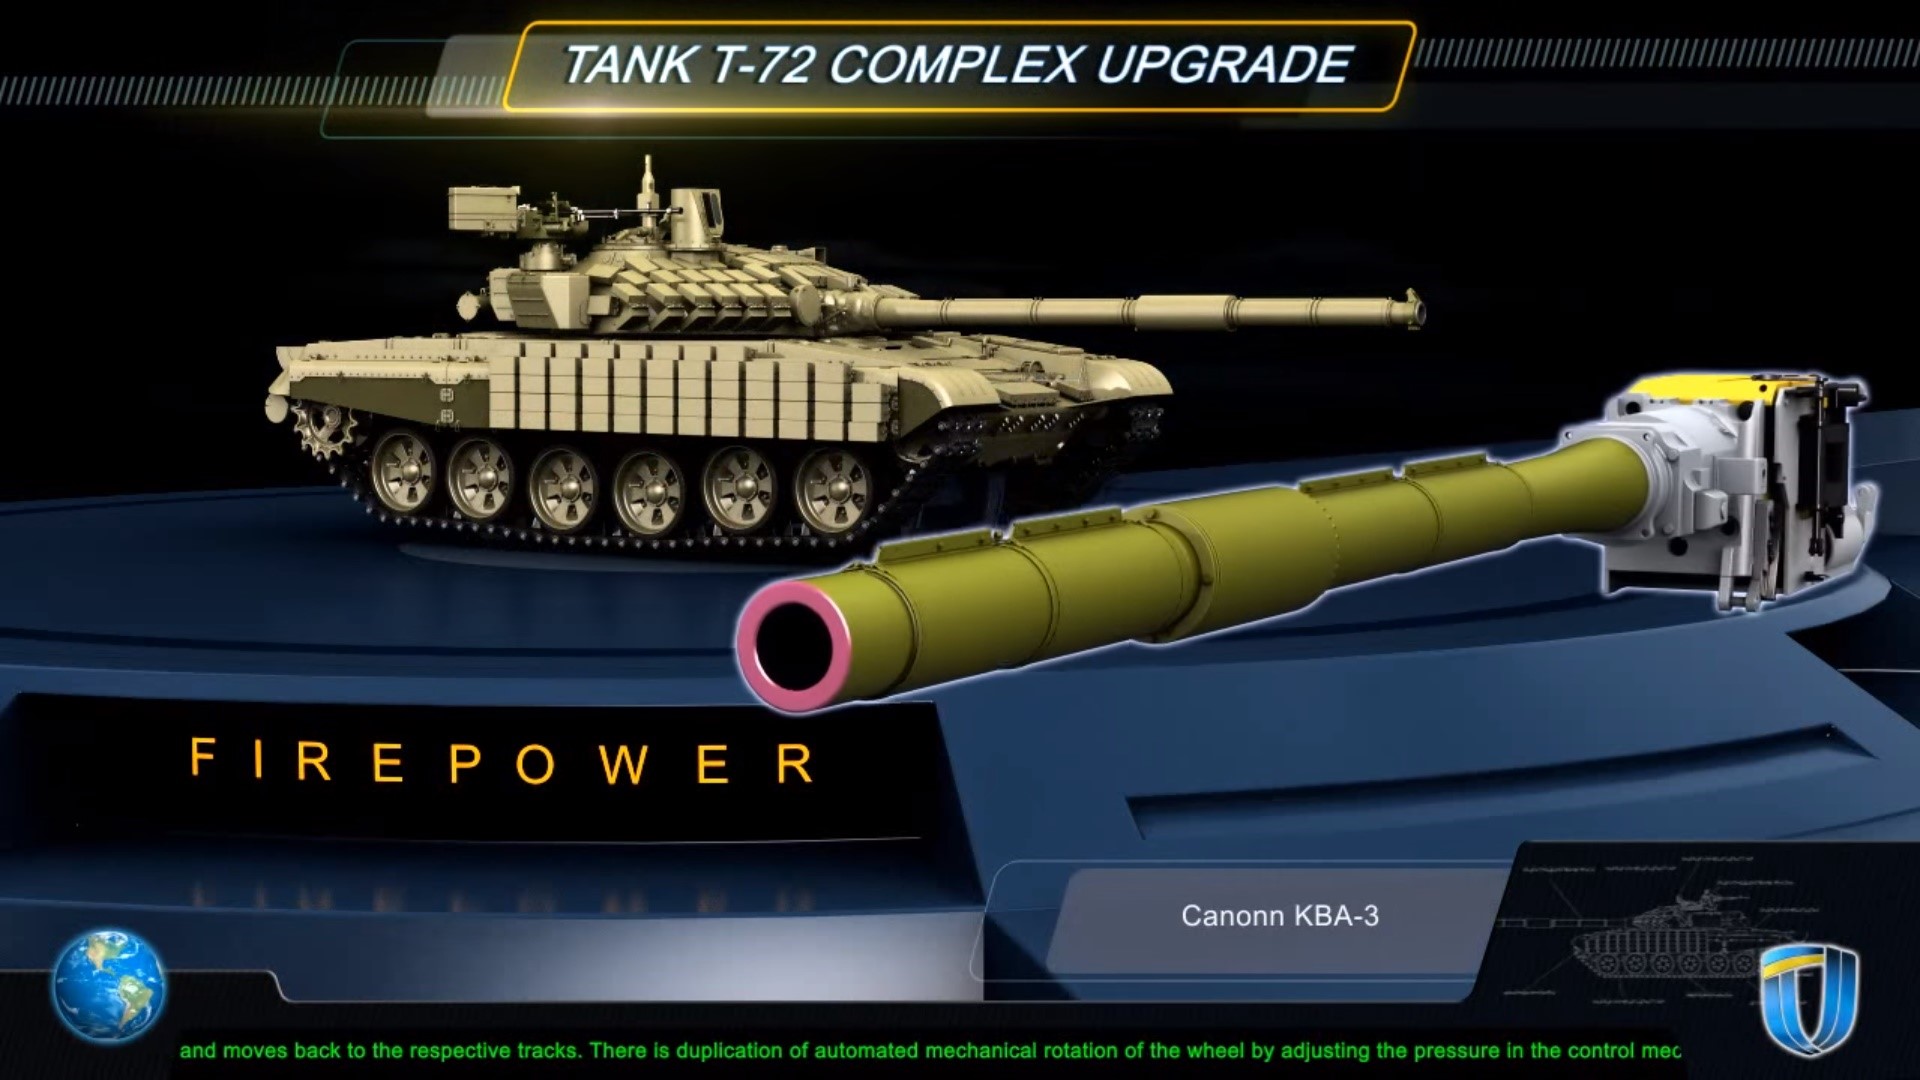 Ukraine Submits Offers To Upgrade Indian T 72 Main Battle Tank Fleet